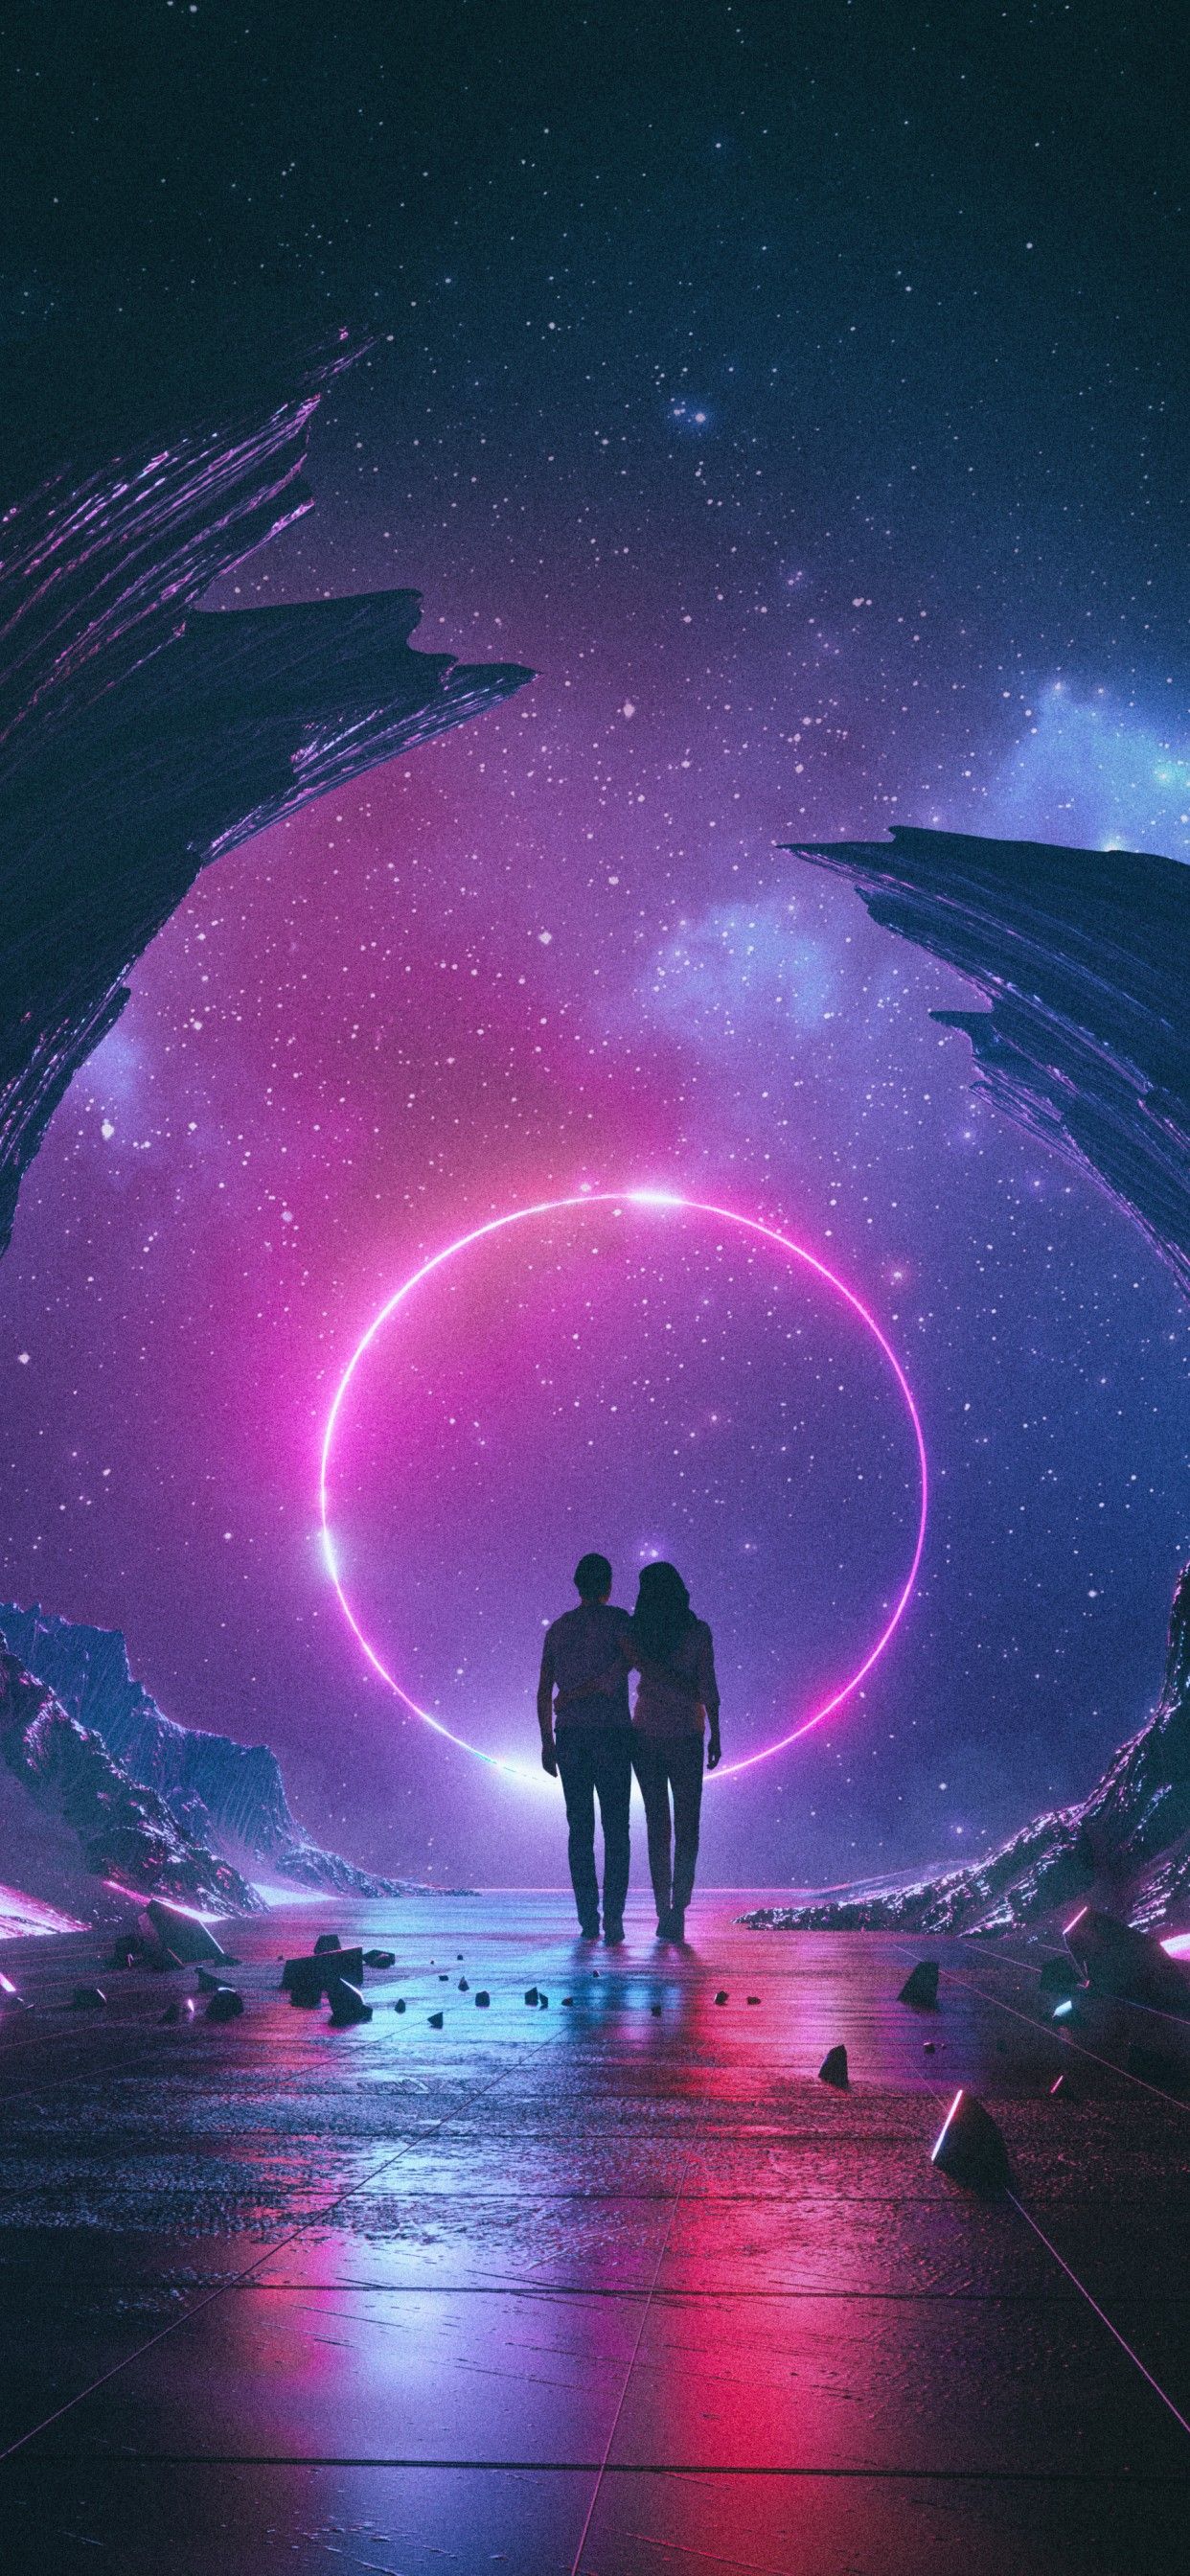 Couple 4K Wallpaper, Dream, Neon, Starry sky, Rocks, Silhouette, Colorful, Aesthetic, Love